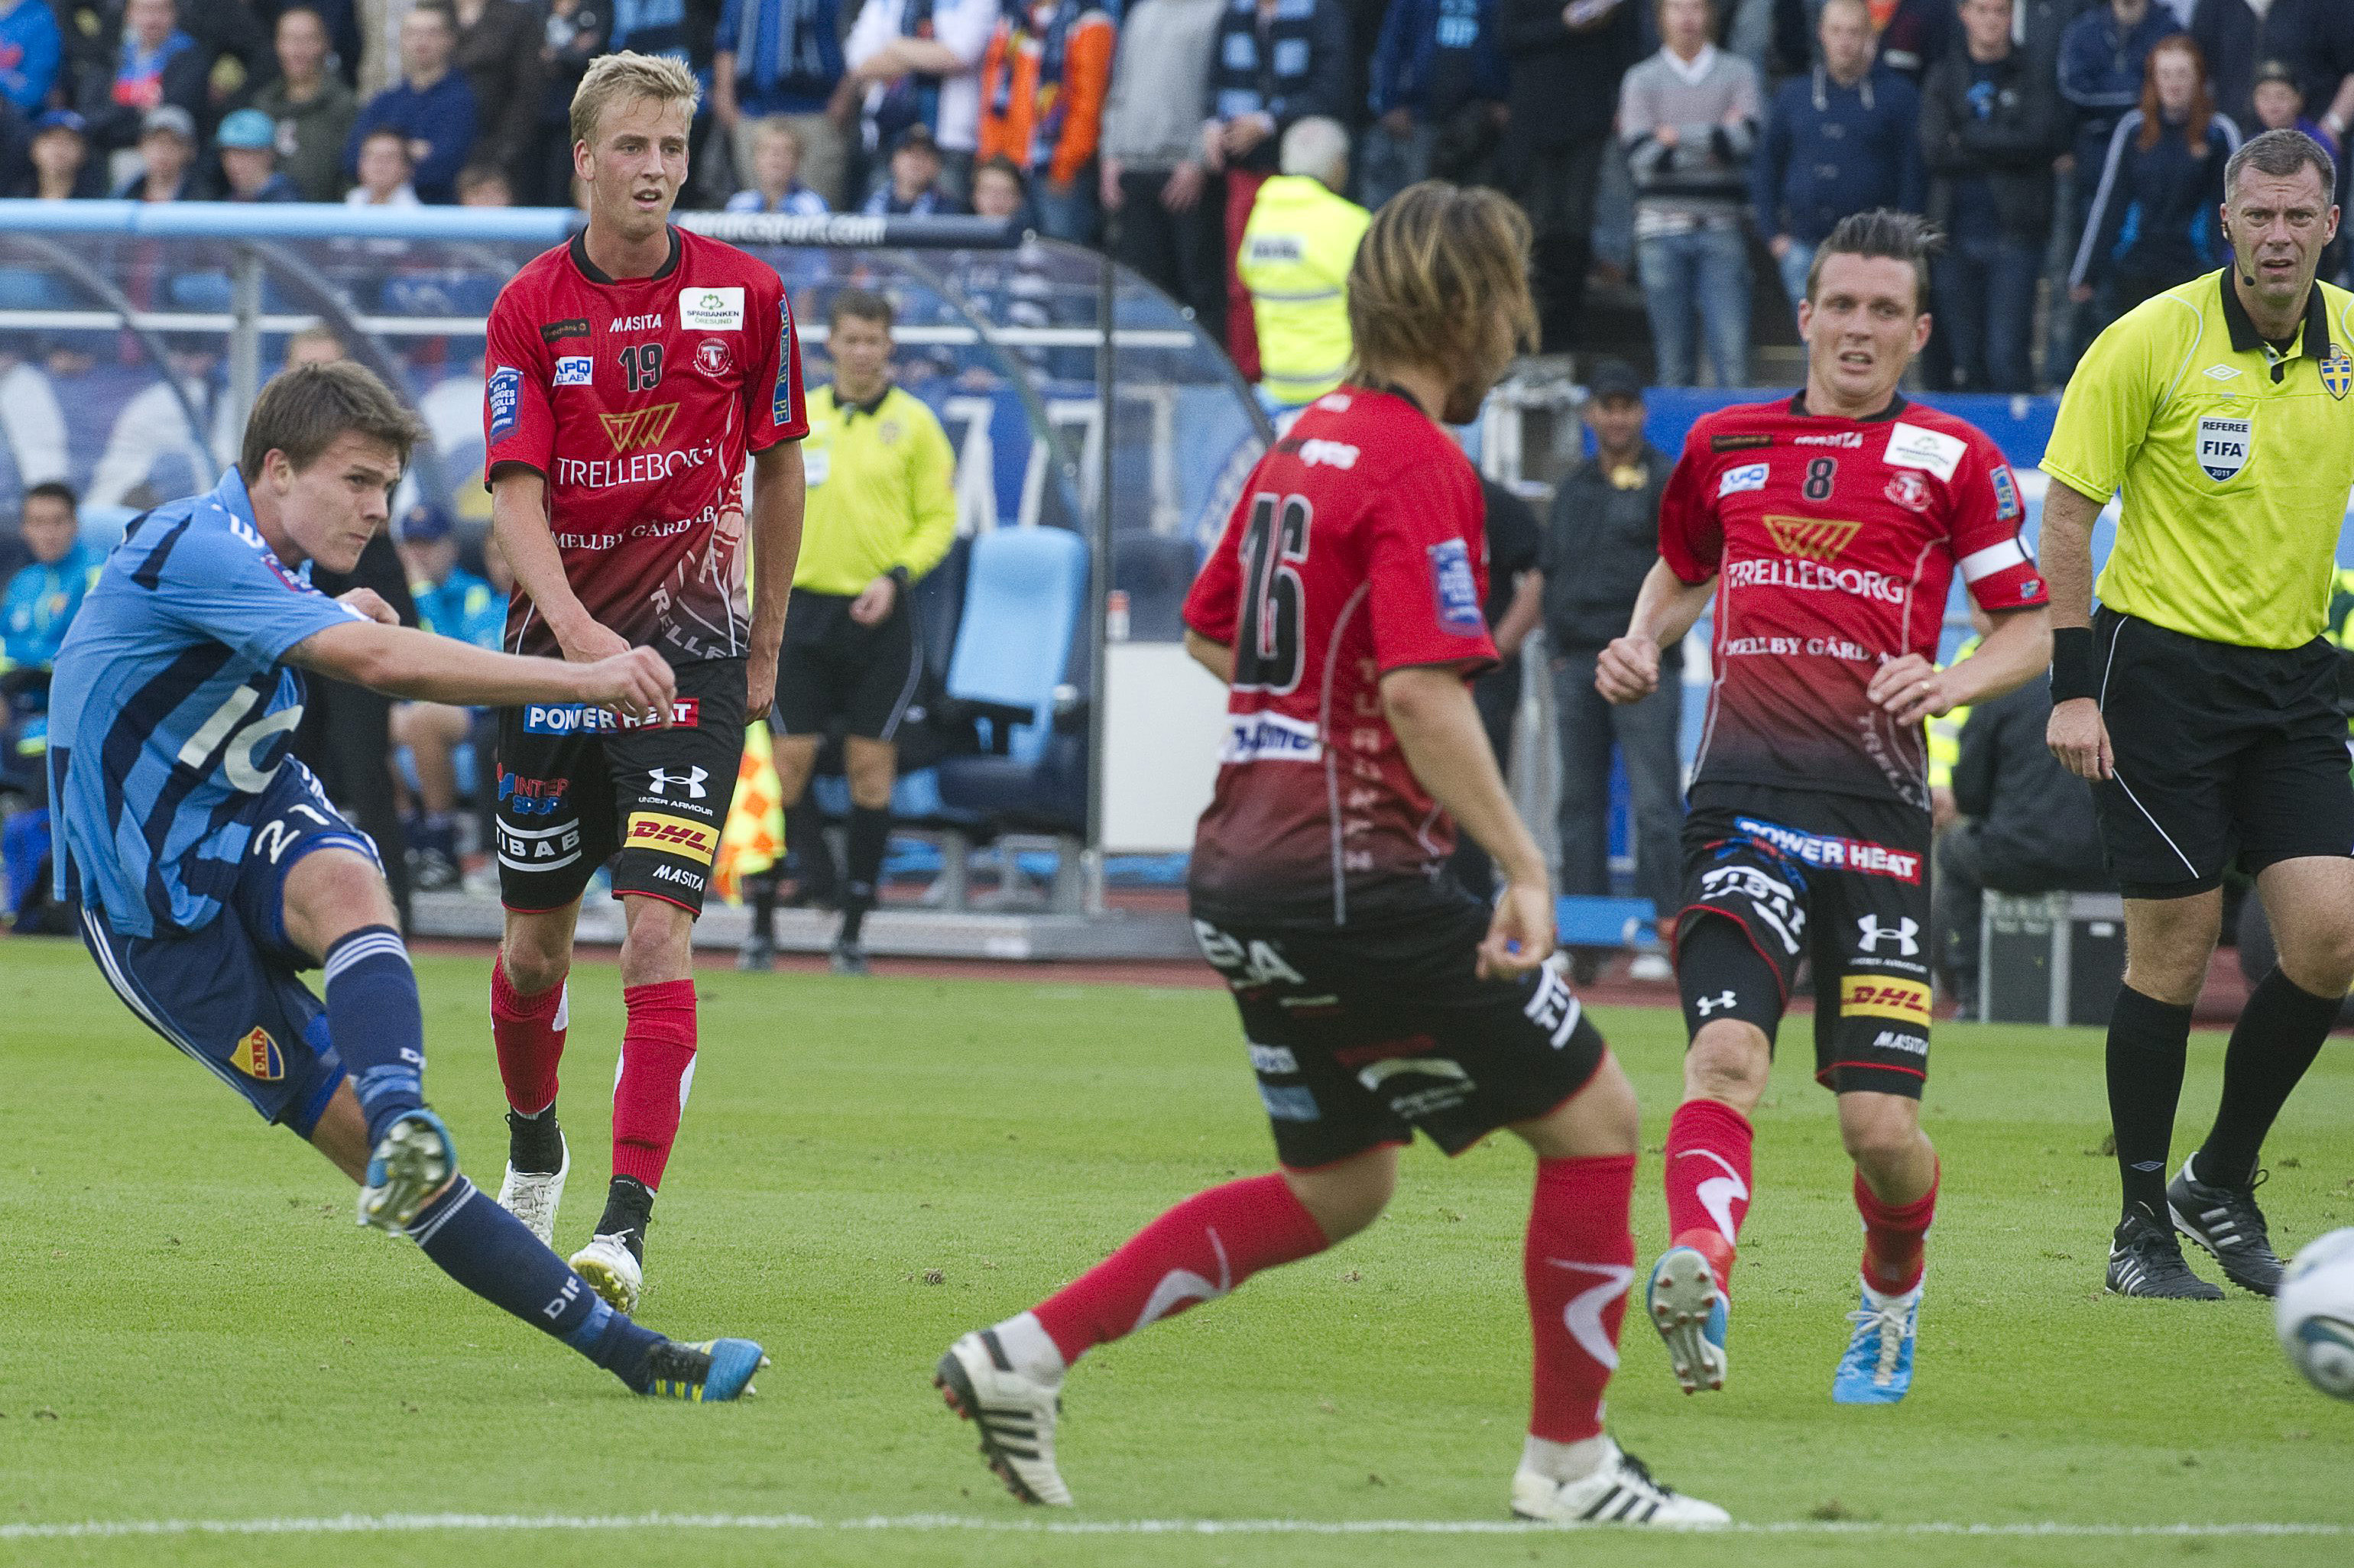 Nicolaj Agger, Allsvenskan, Djurgården IF, Fredrik Jensen, Kennedy Igboananike, Trelleborg